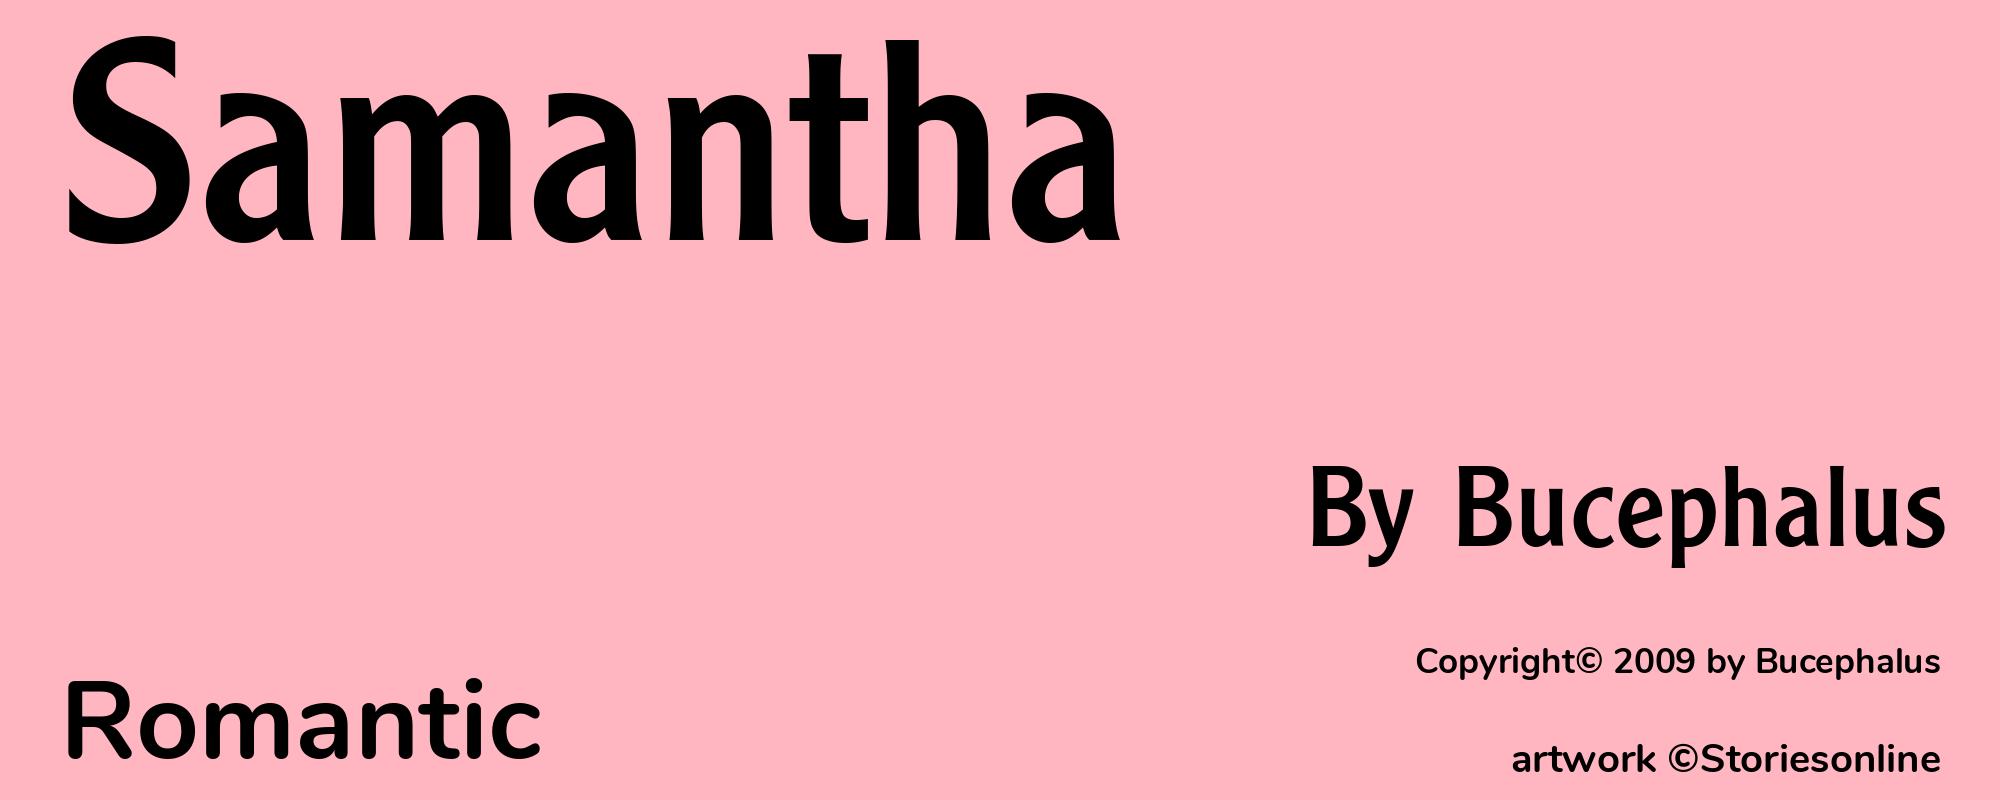 Samantha - Cover